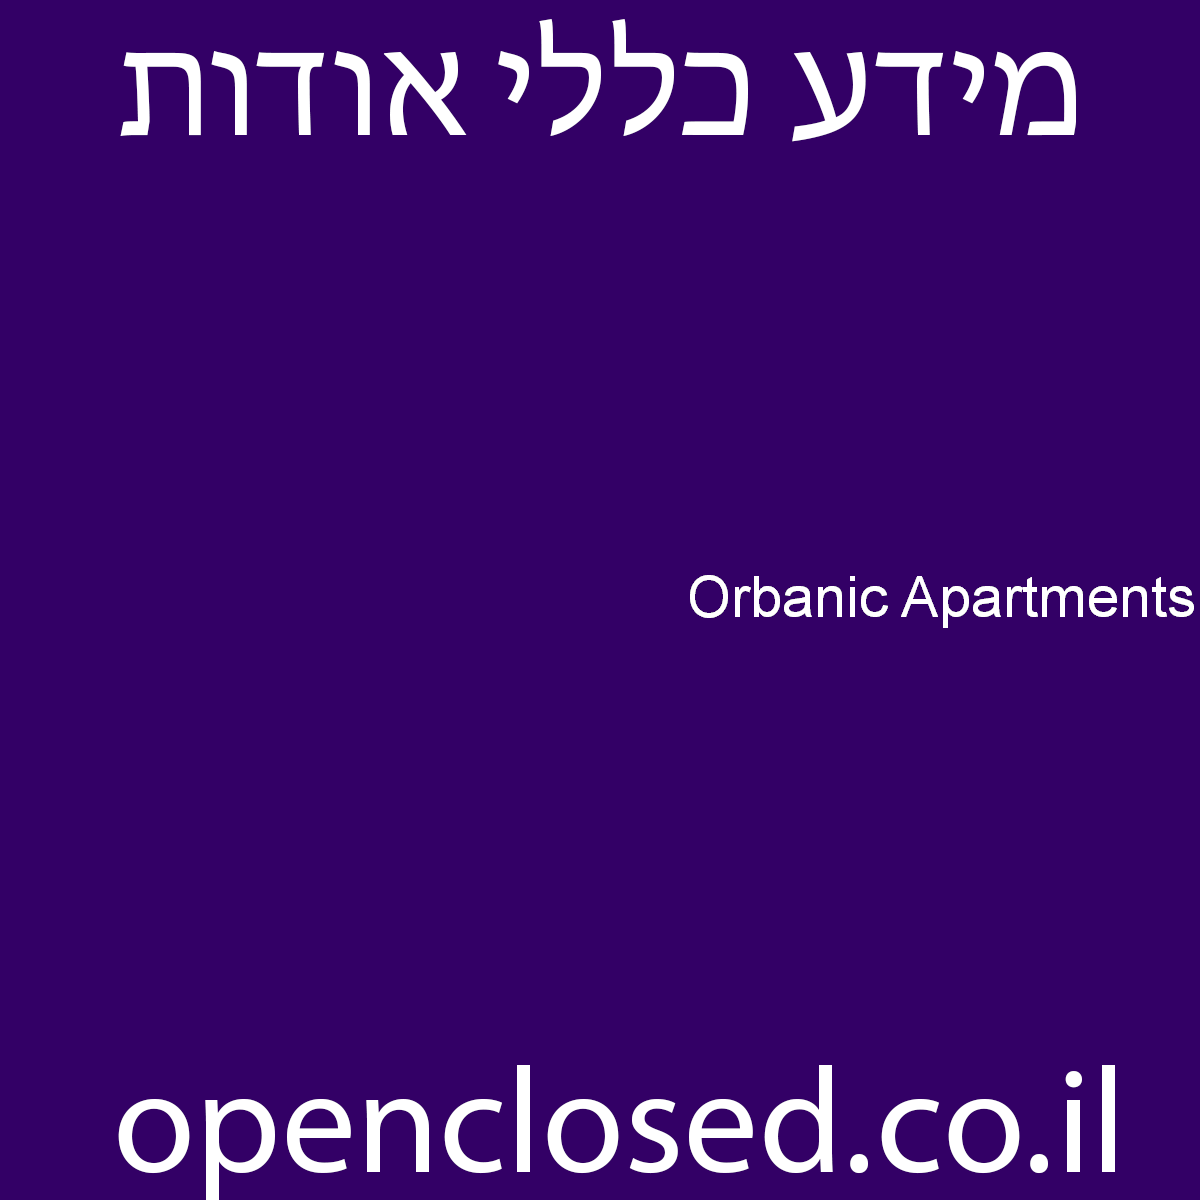 Orbanic Apartments